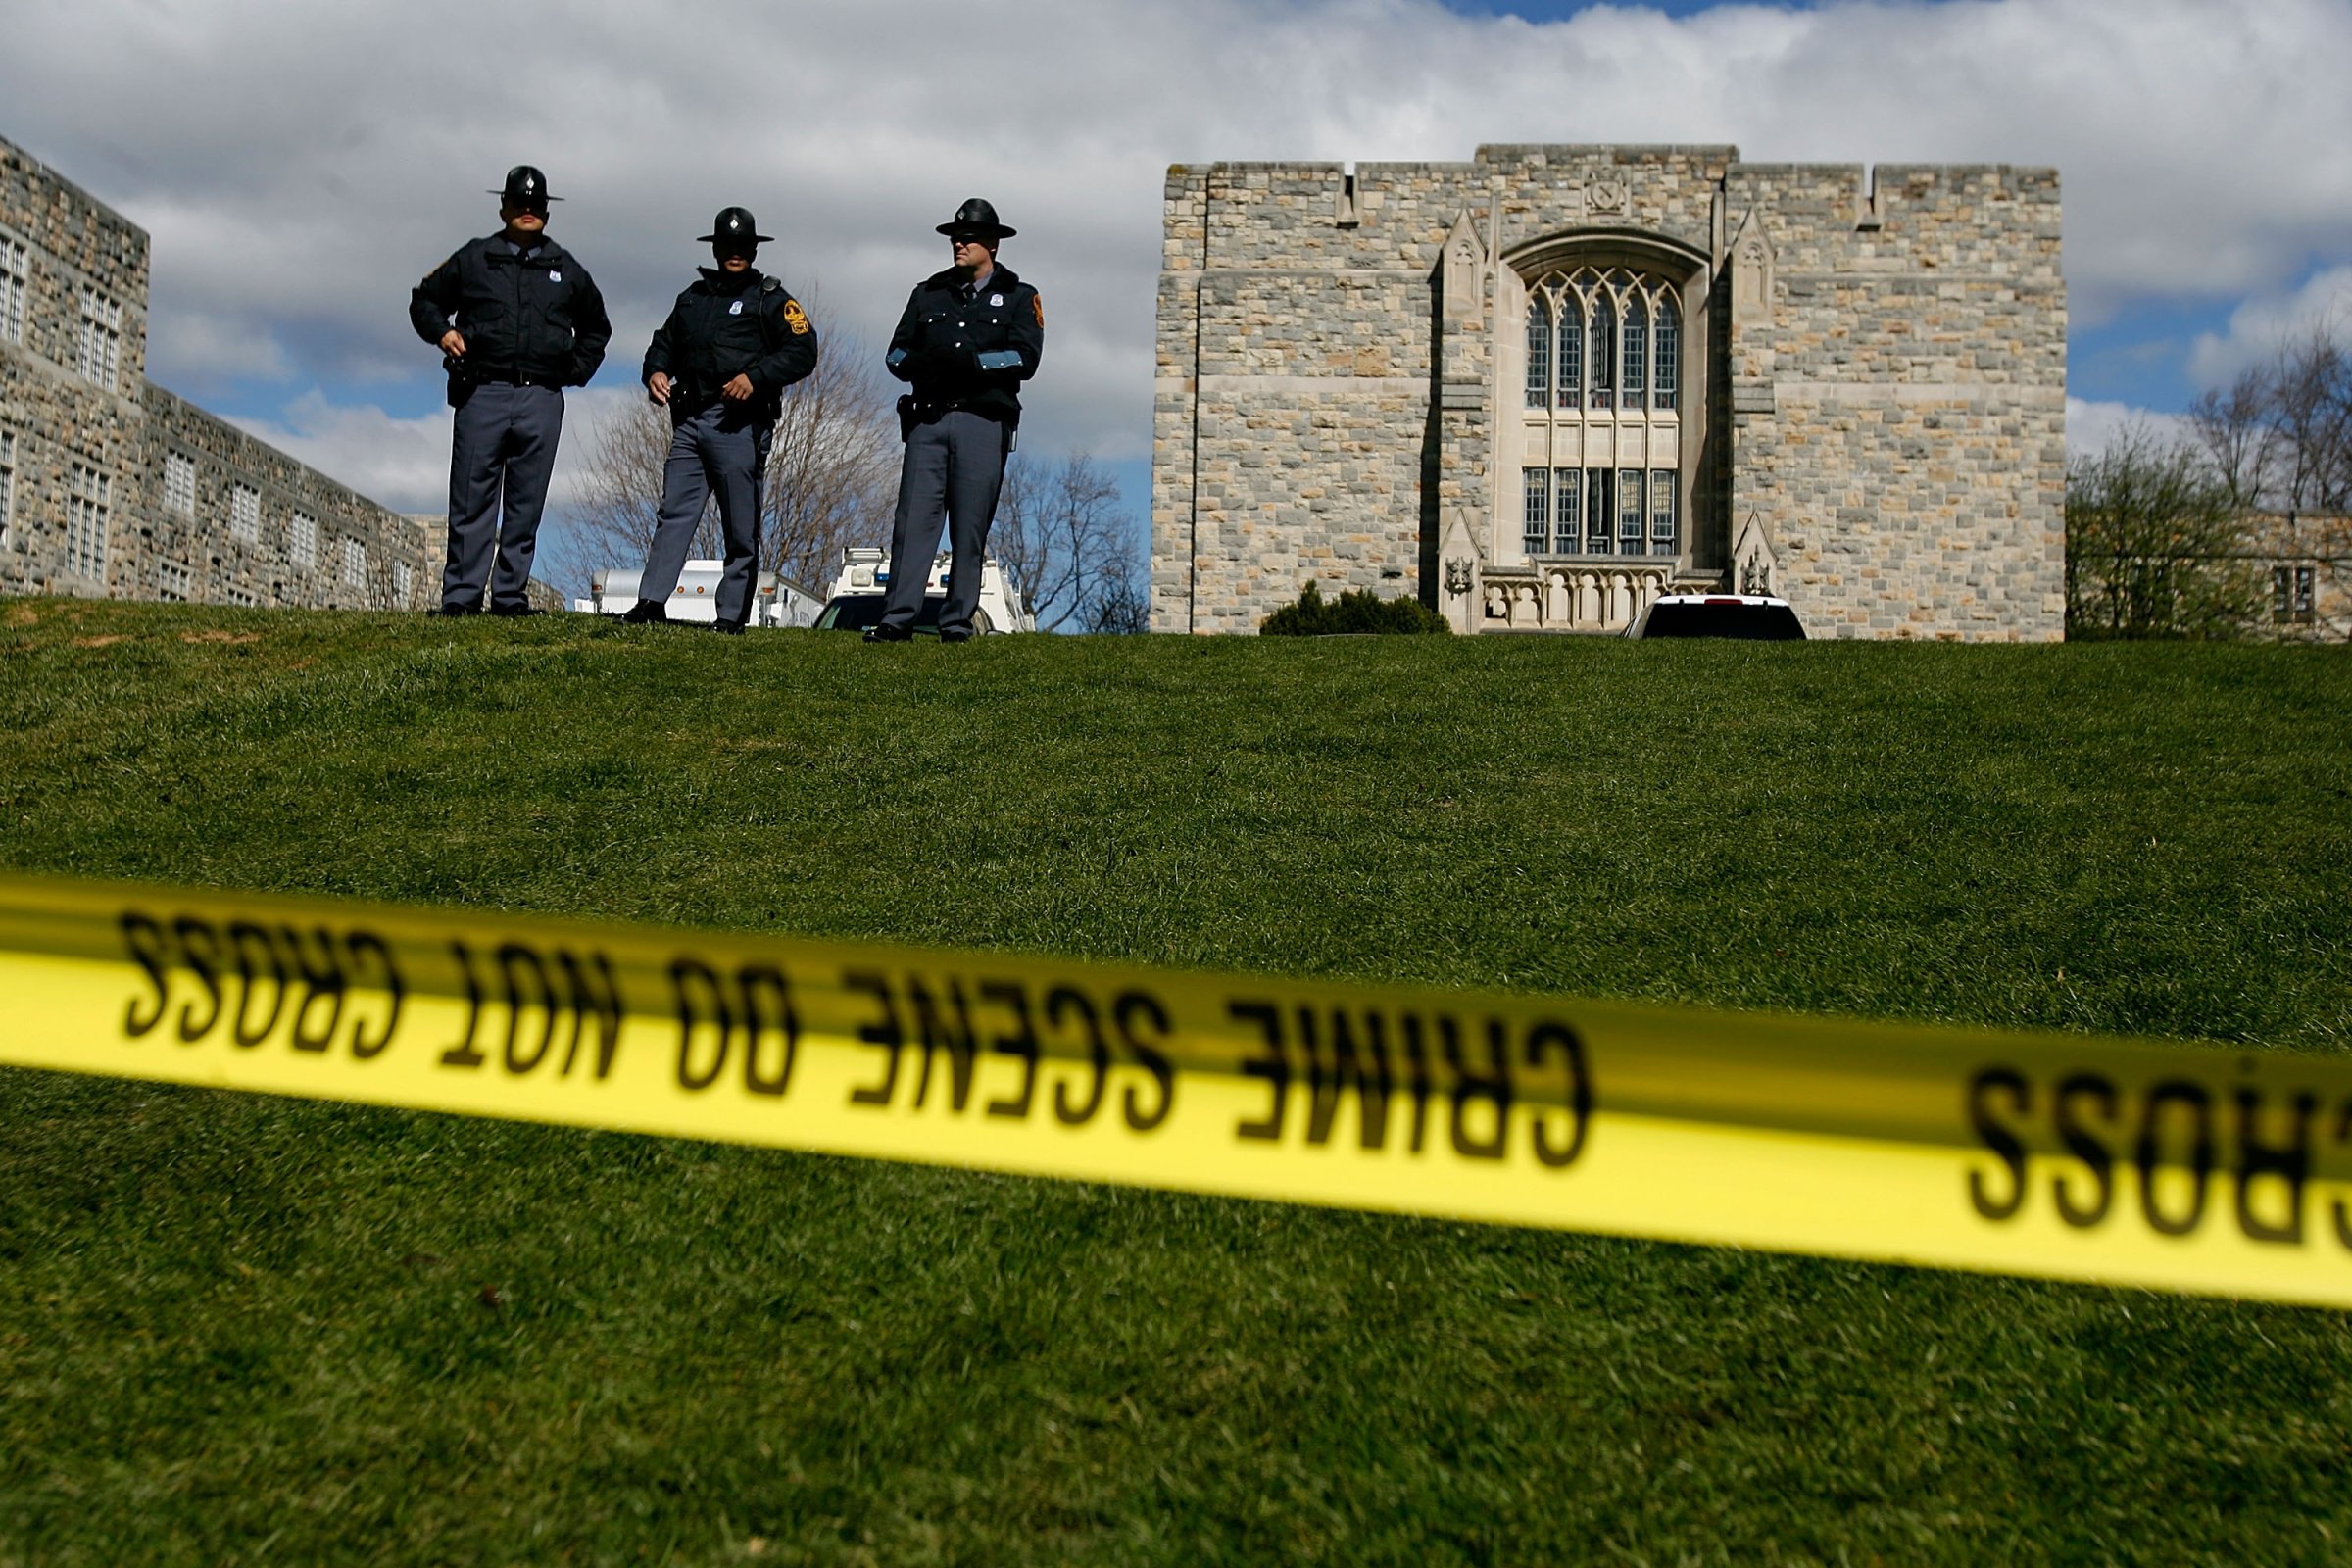 Virginia Tech Community Mourns Day After Deadliest U.S. Shooting